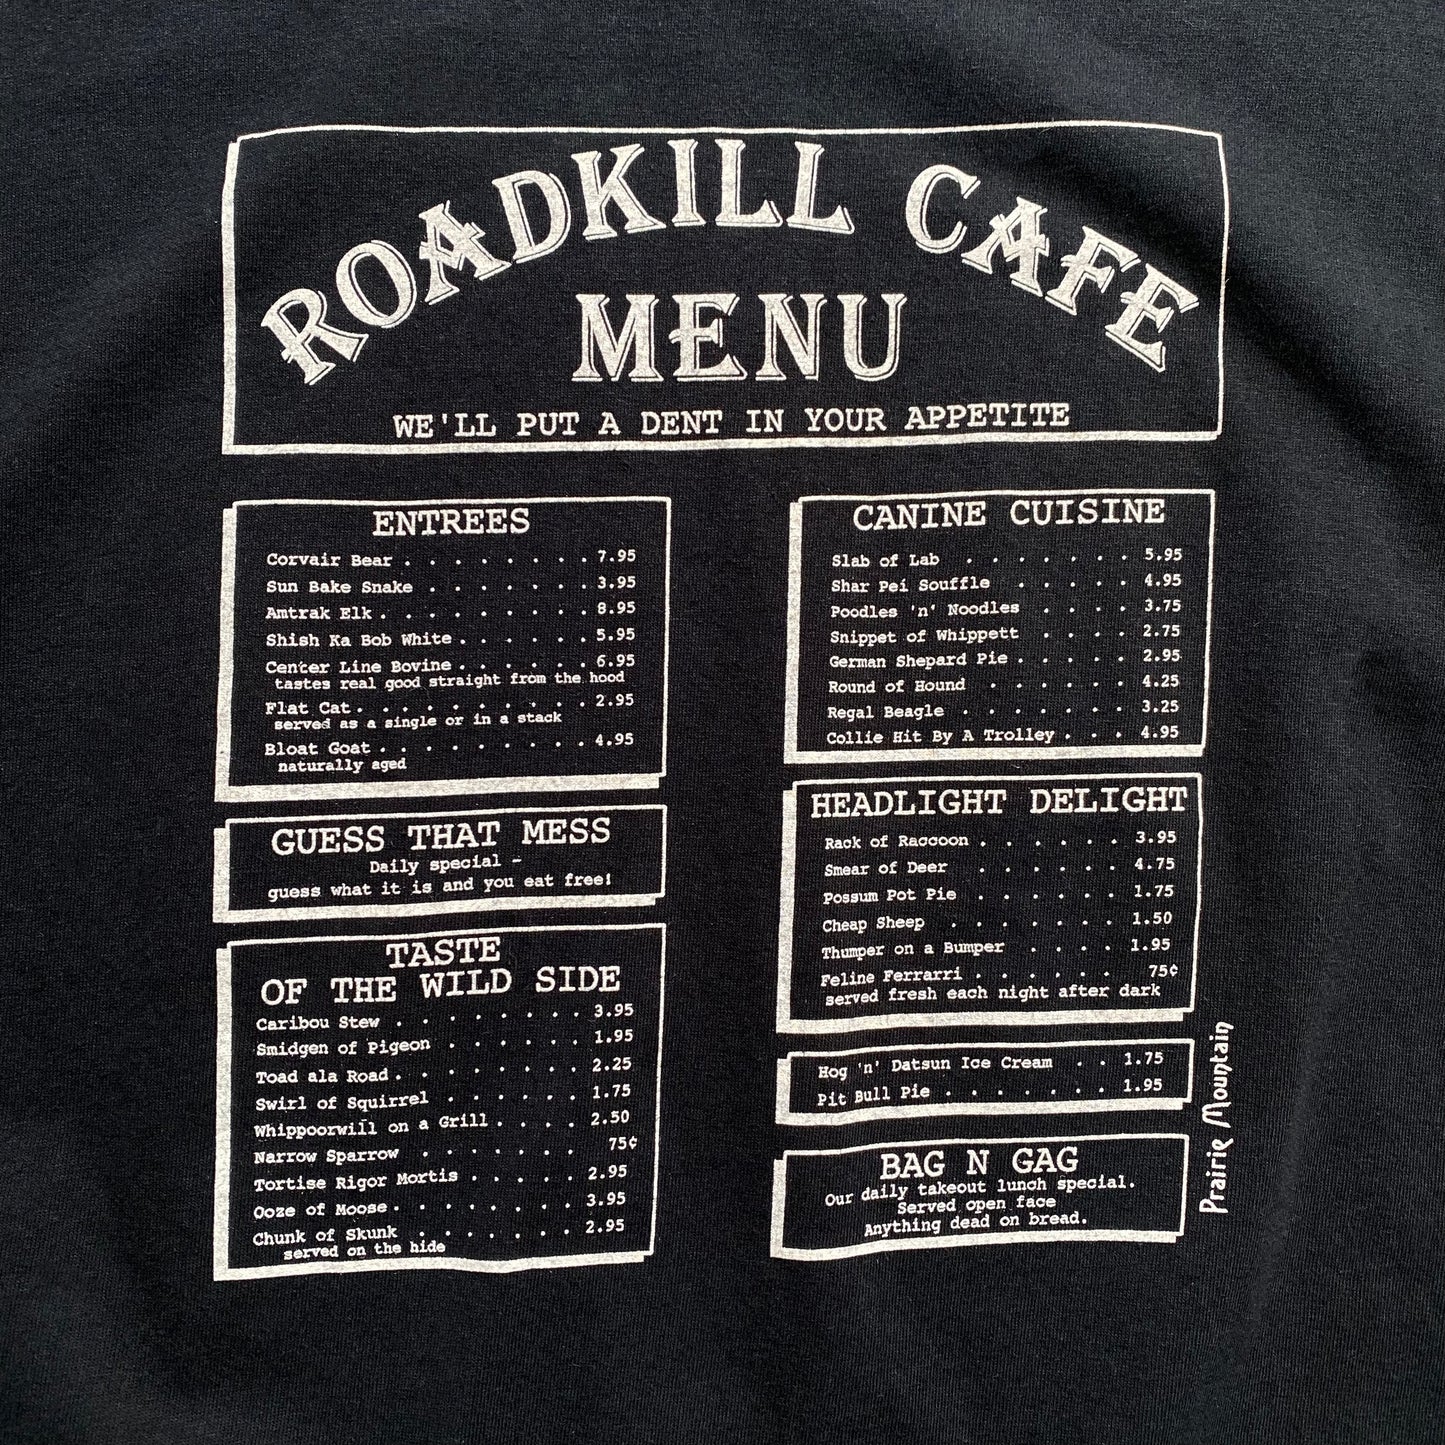 00's ROADKILL CAFE "MENU" T-SHIRT